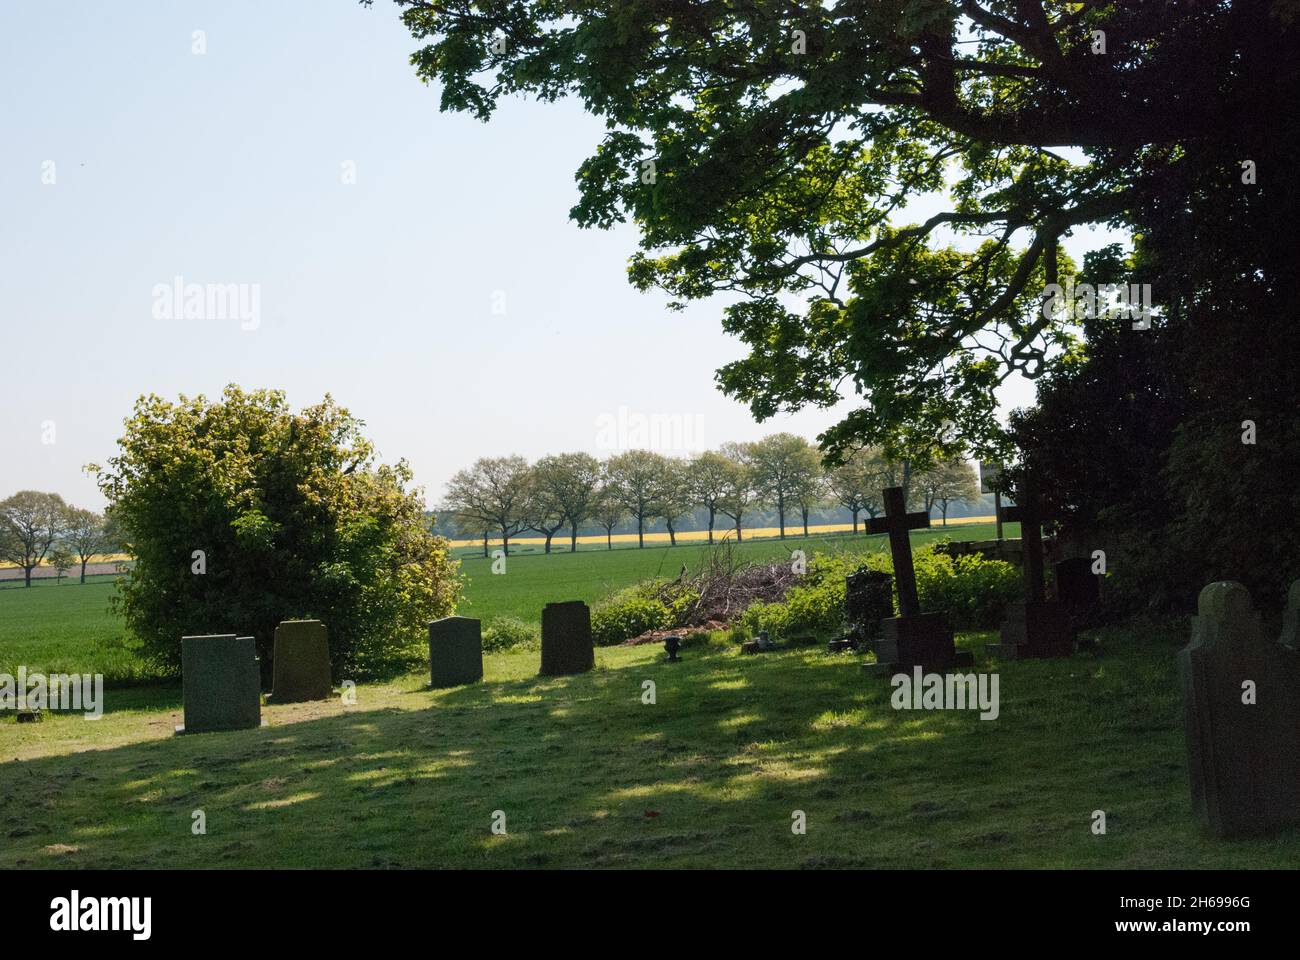 Memorial Cross Stone, Graveyard, Cemetery, Church Grounds, Graves, Burial Ground, Gravestones, Headstones, Gravestones, Countryside, Rural Stock Photo